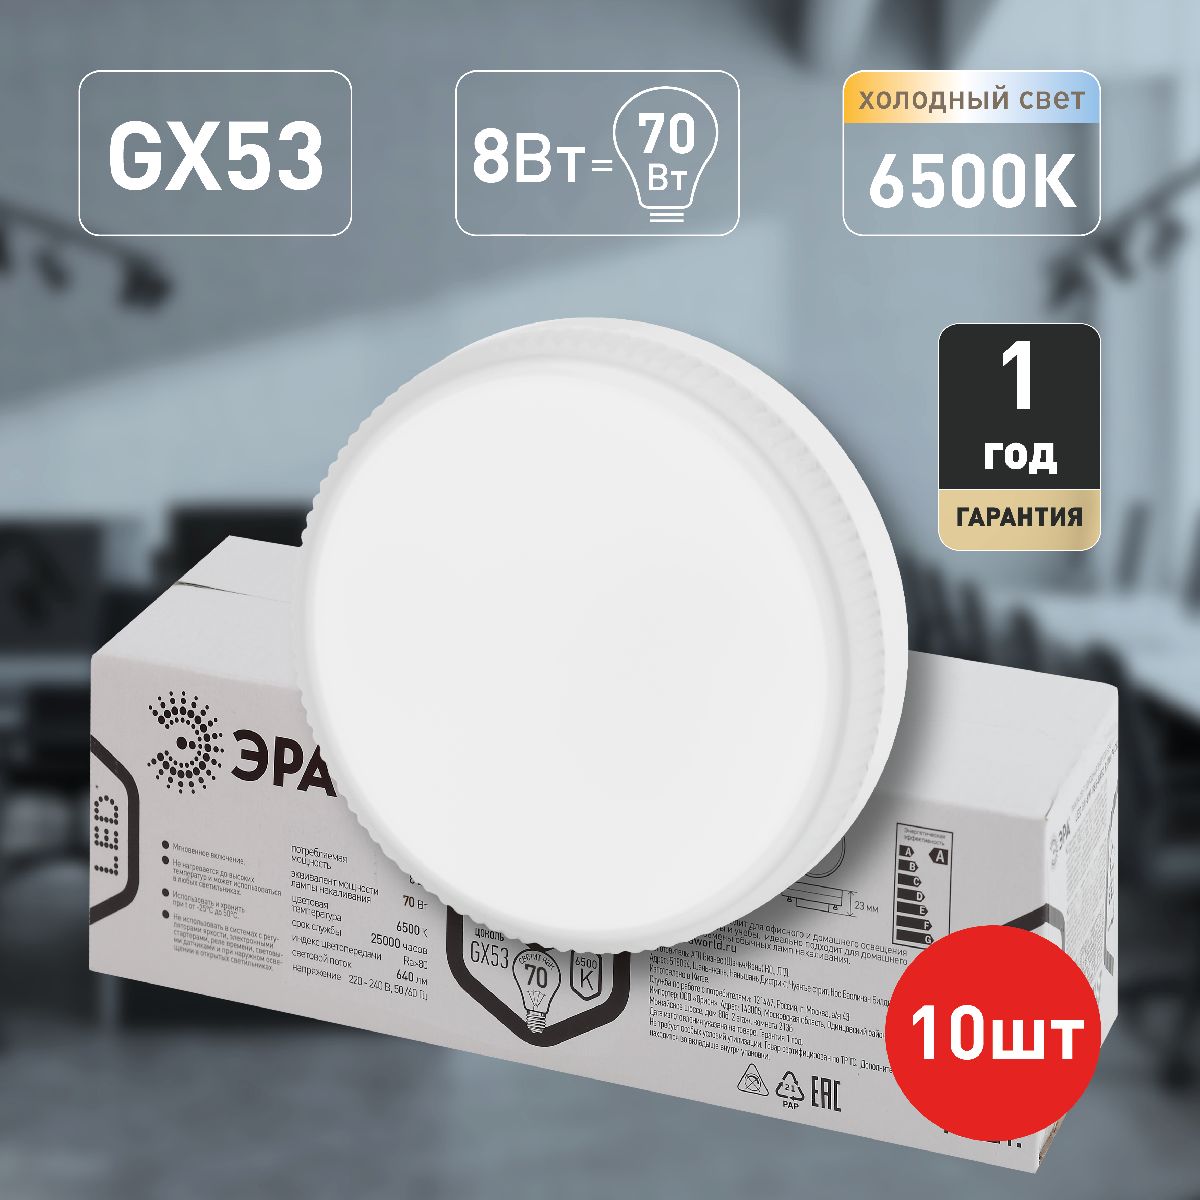 Лампа светодиодная Эра GX53 8W 6500K LED GX-8W-865-GX53 R (10-PACK) Б0045332